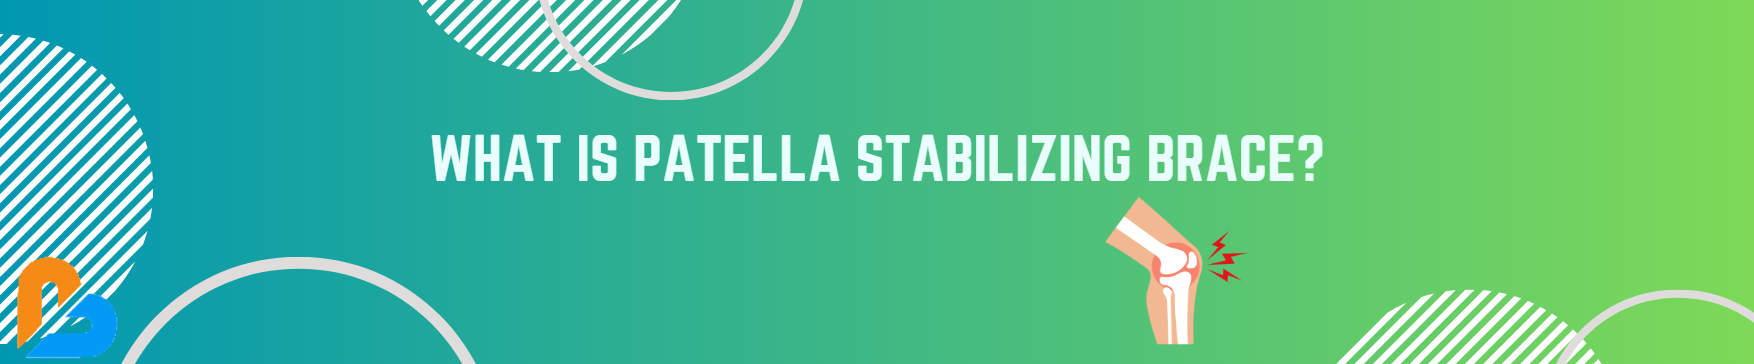 What is Patella Stabilizing Brace?